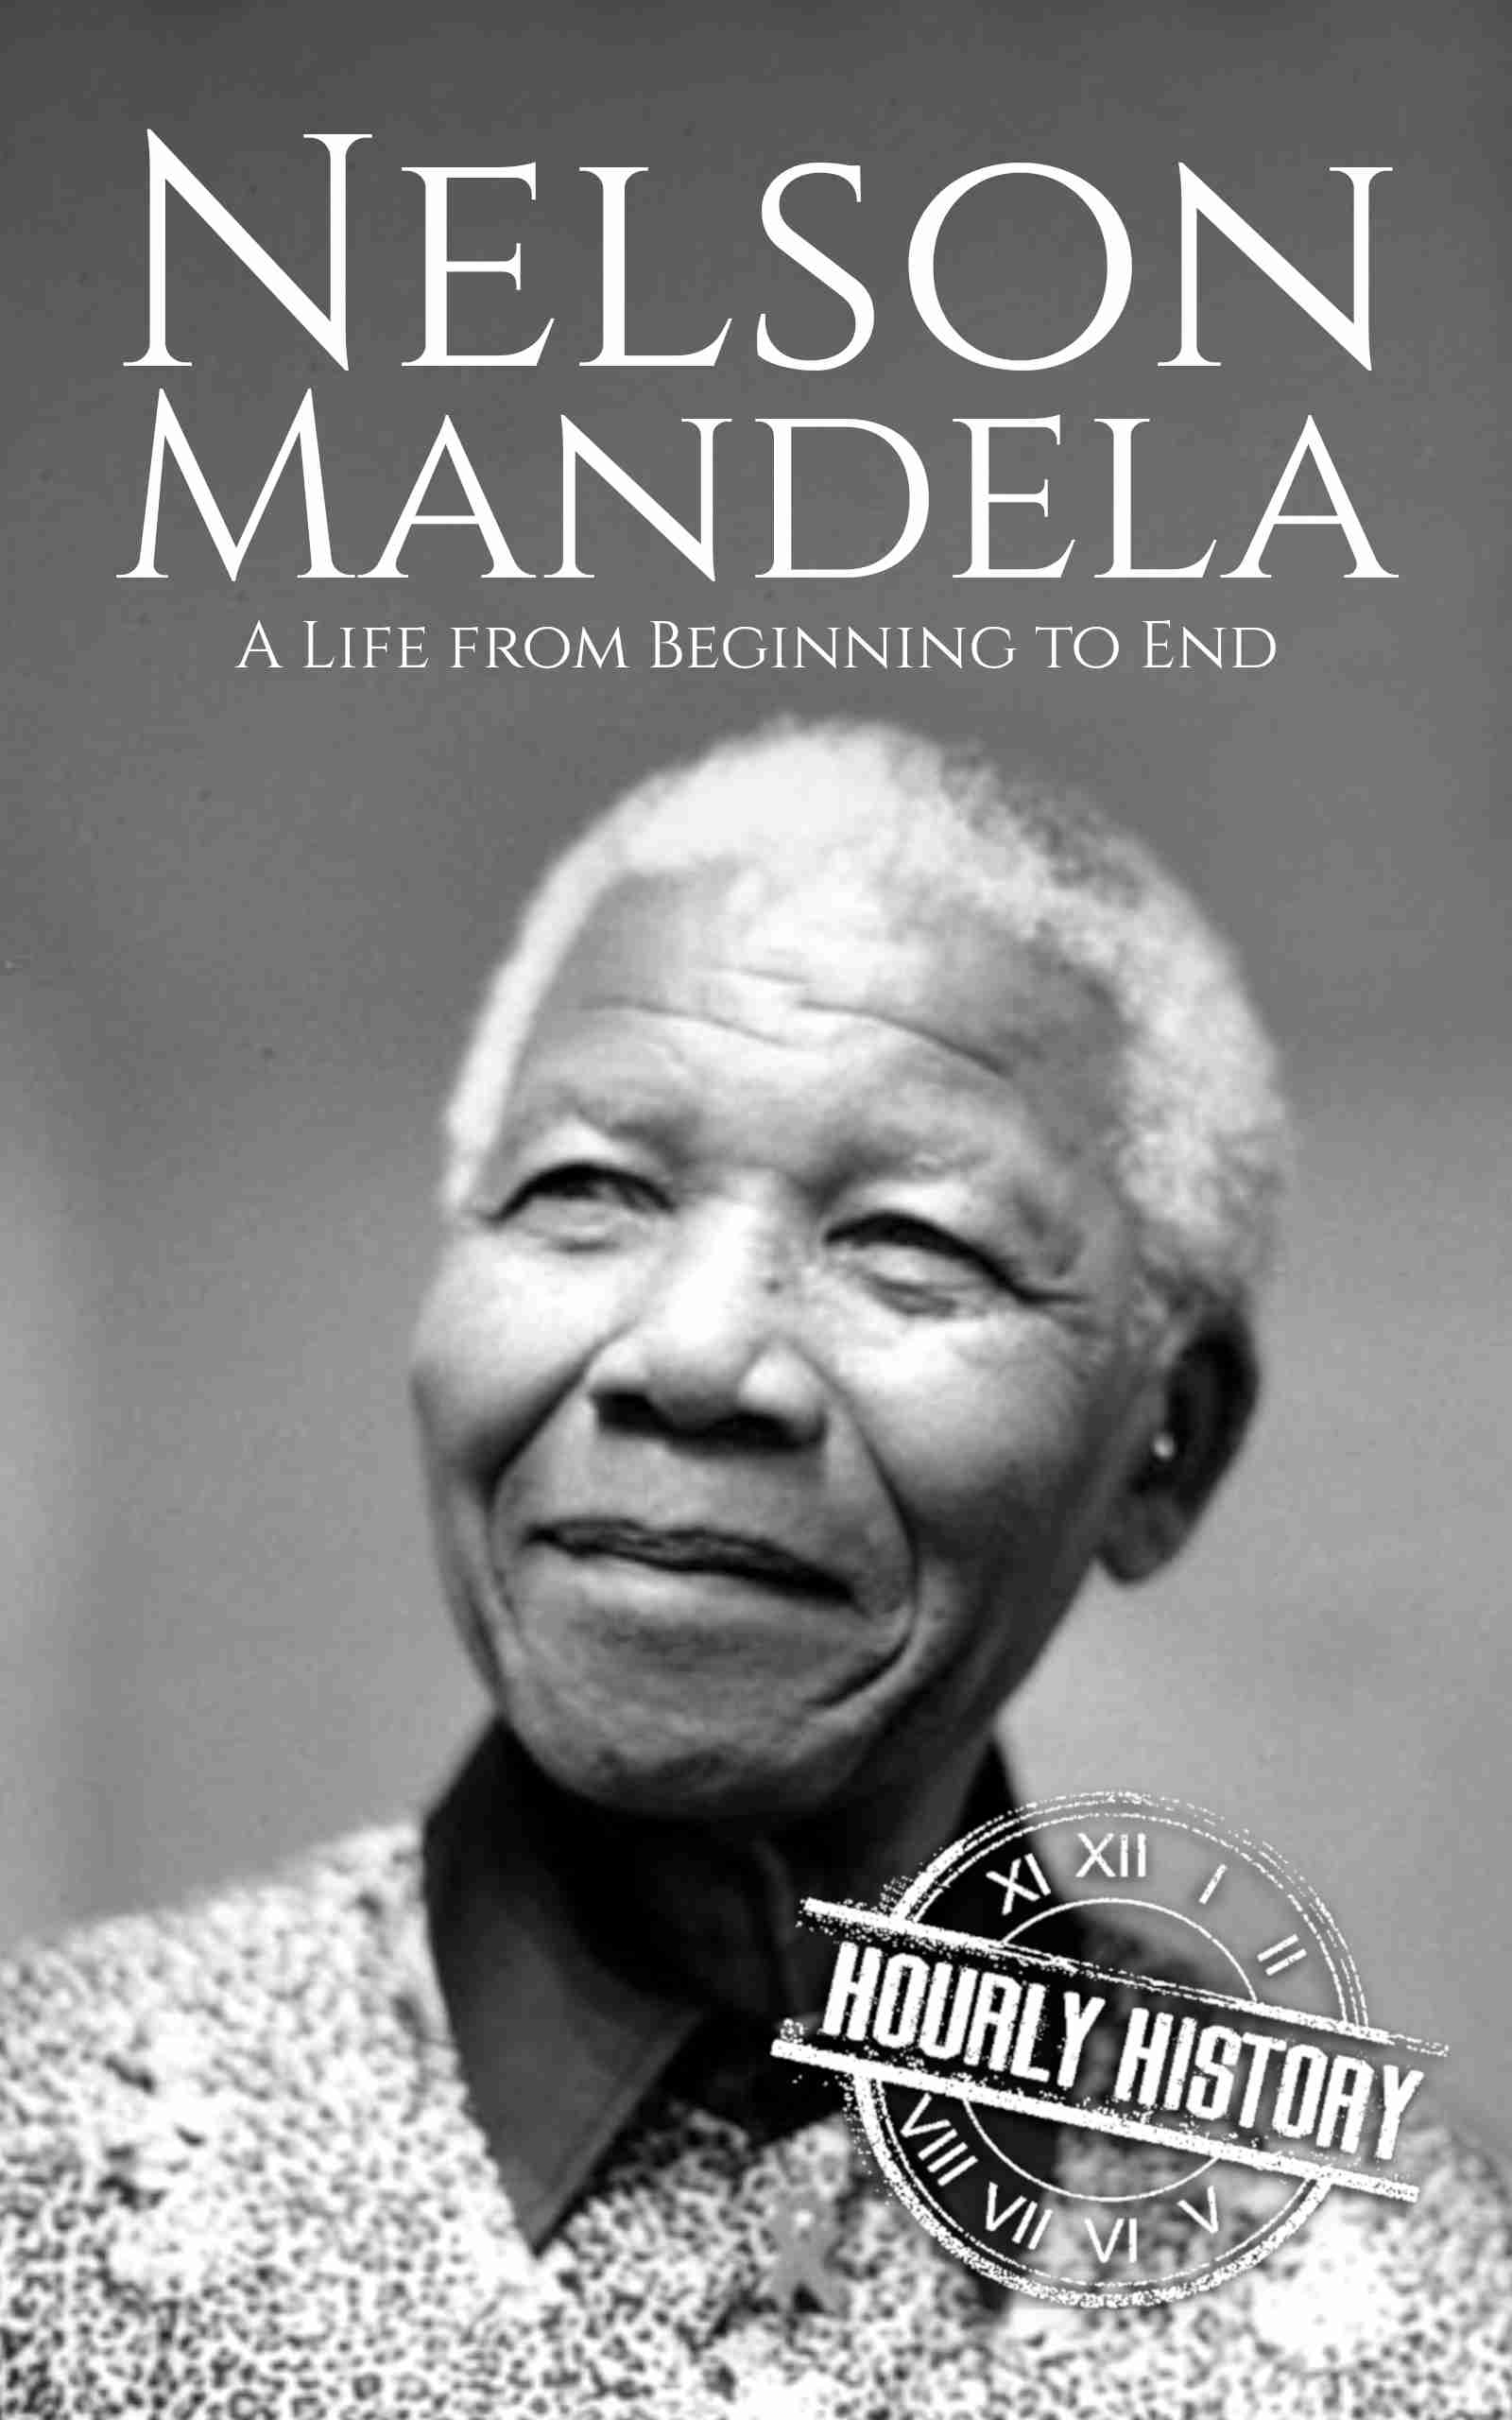 biography of nelson mandela pdf in afrikaans